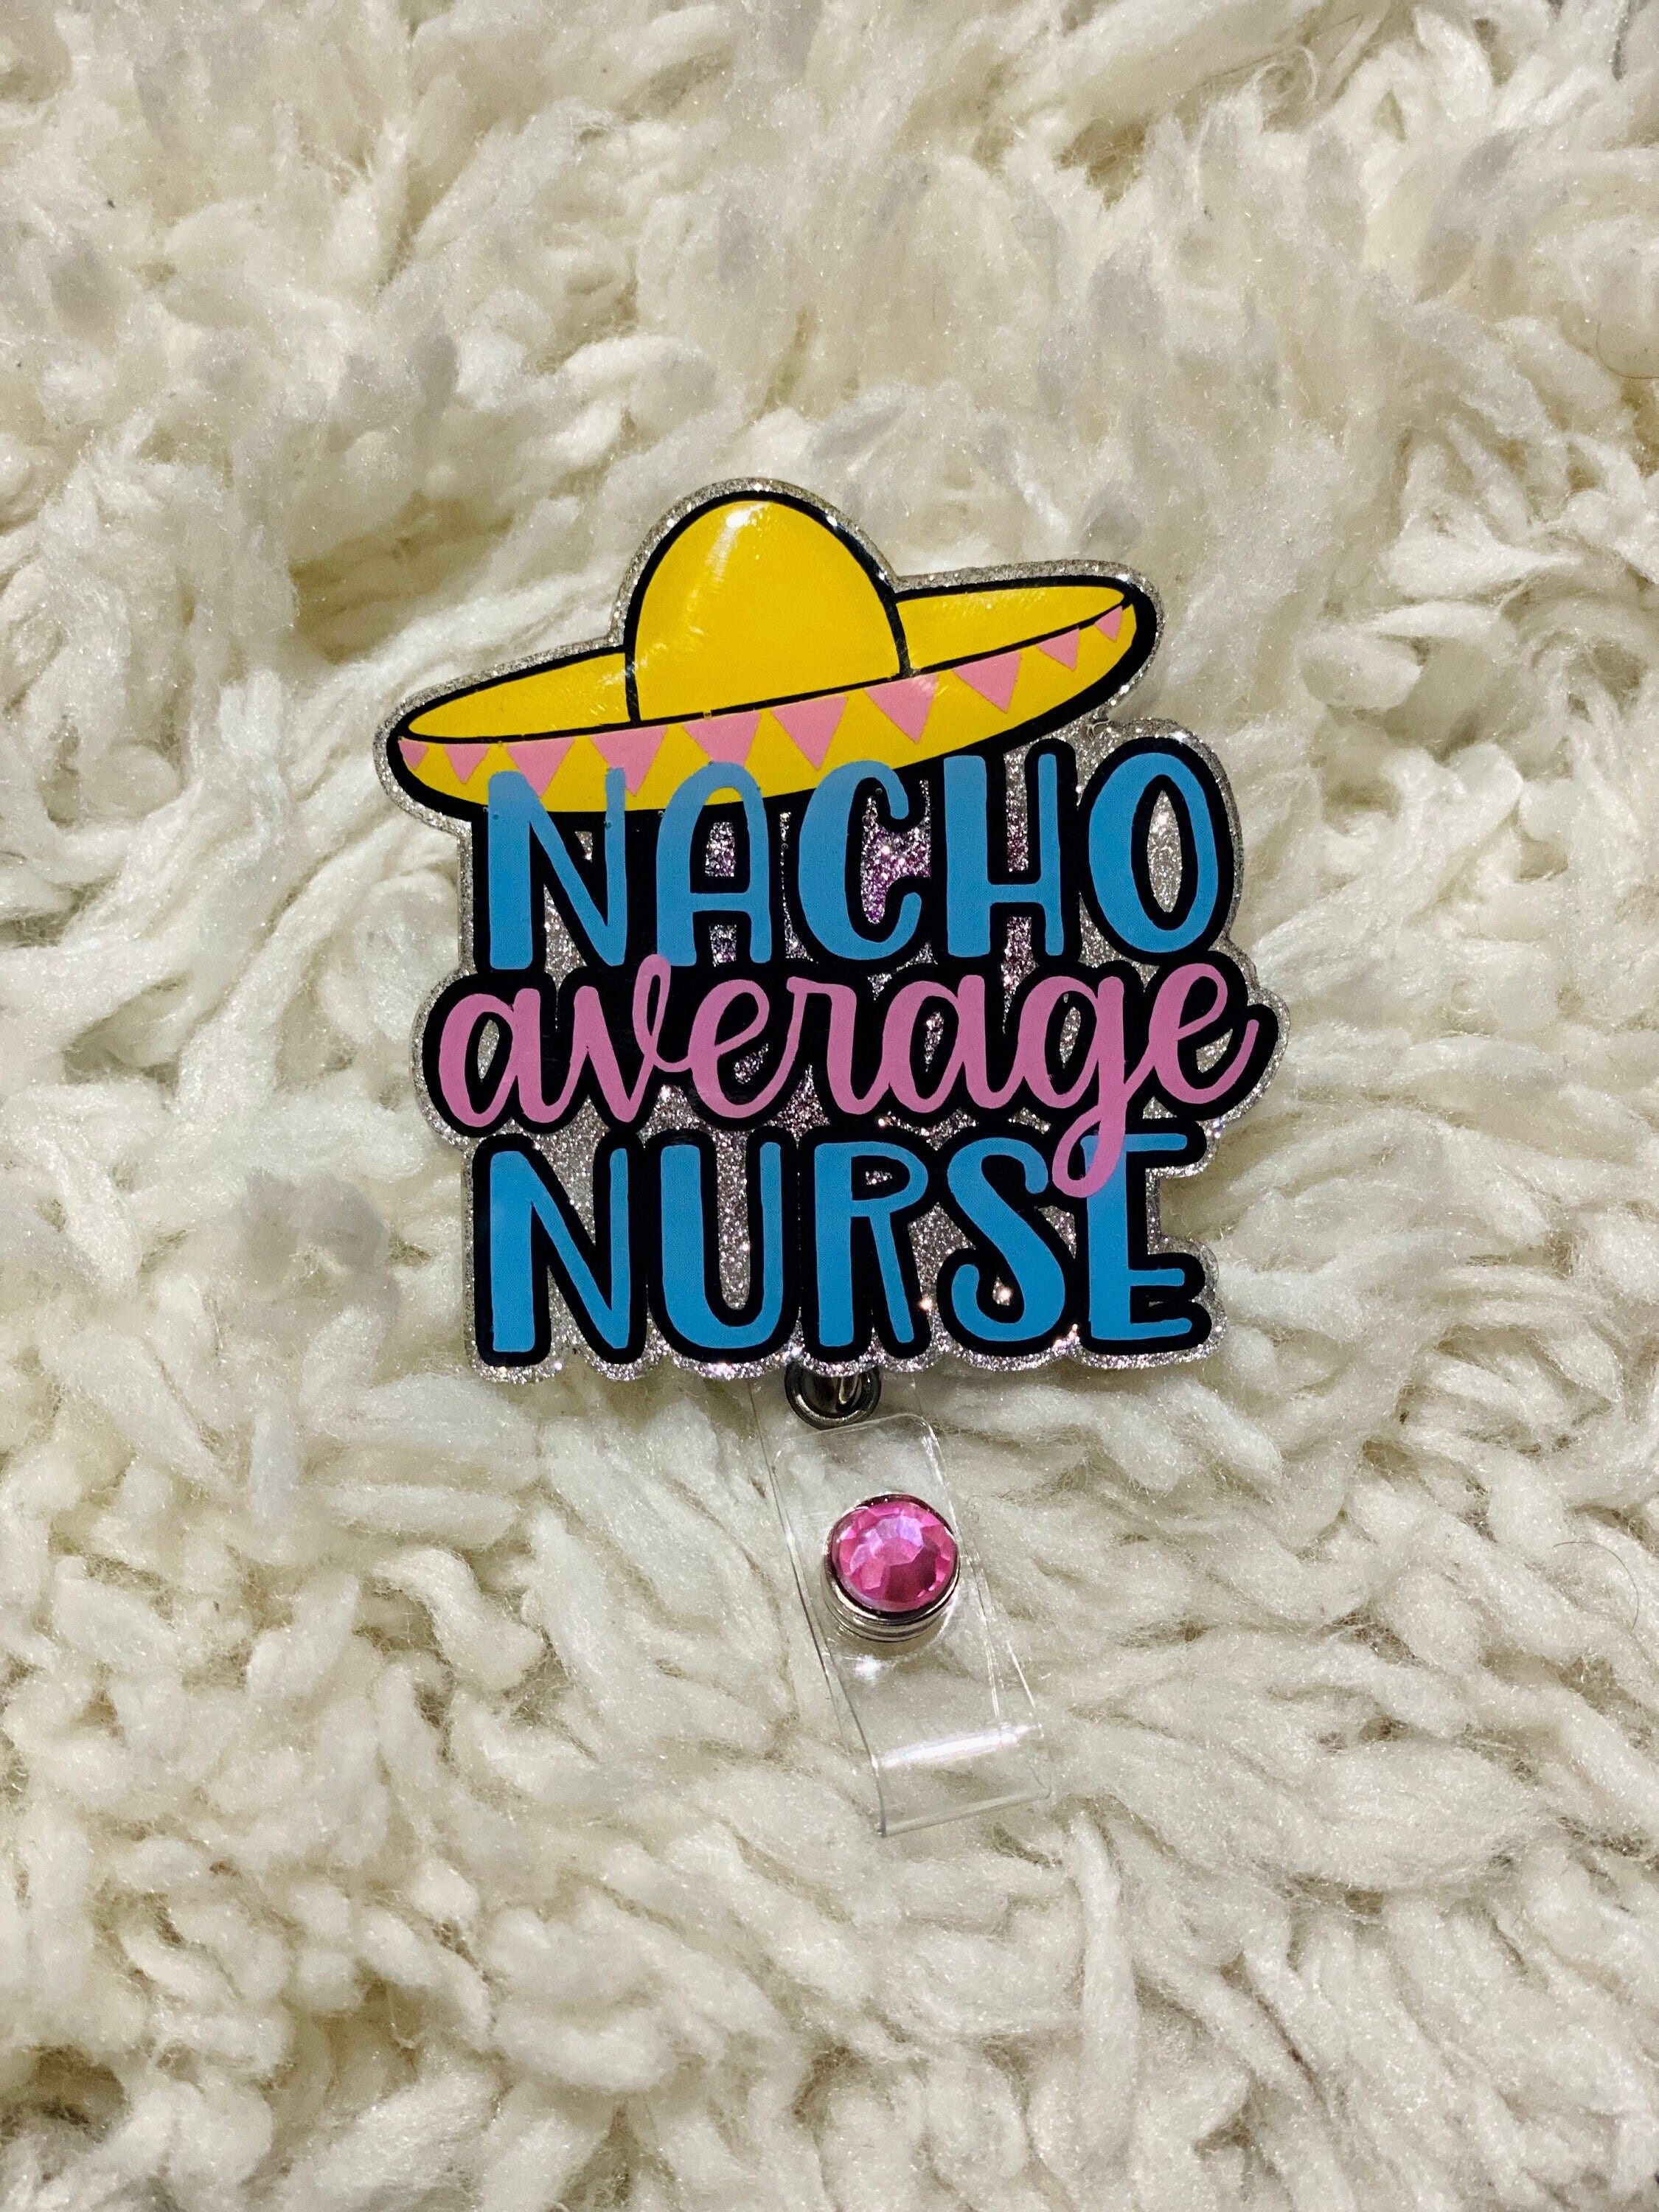 Nacho Average Nurse Badge Reel